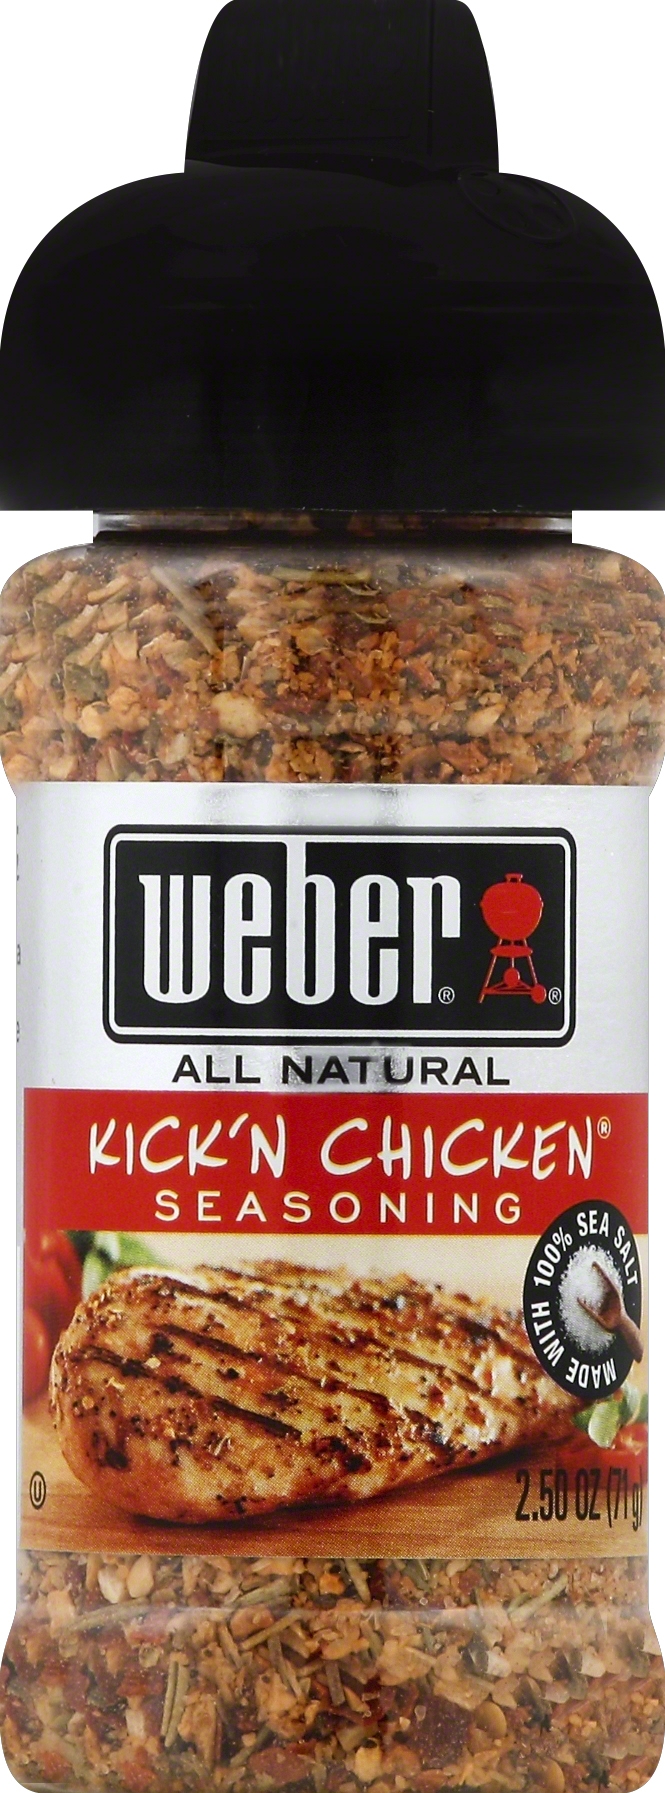 Weber Kick'n Chicken Seasoning - 22 oz